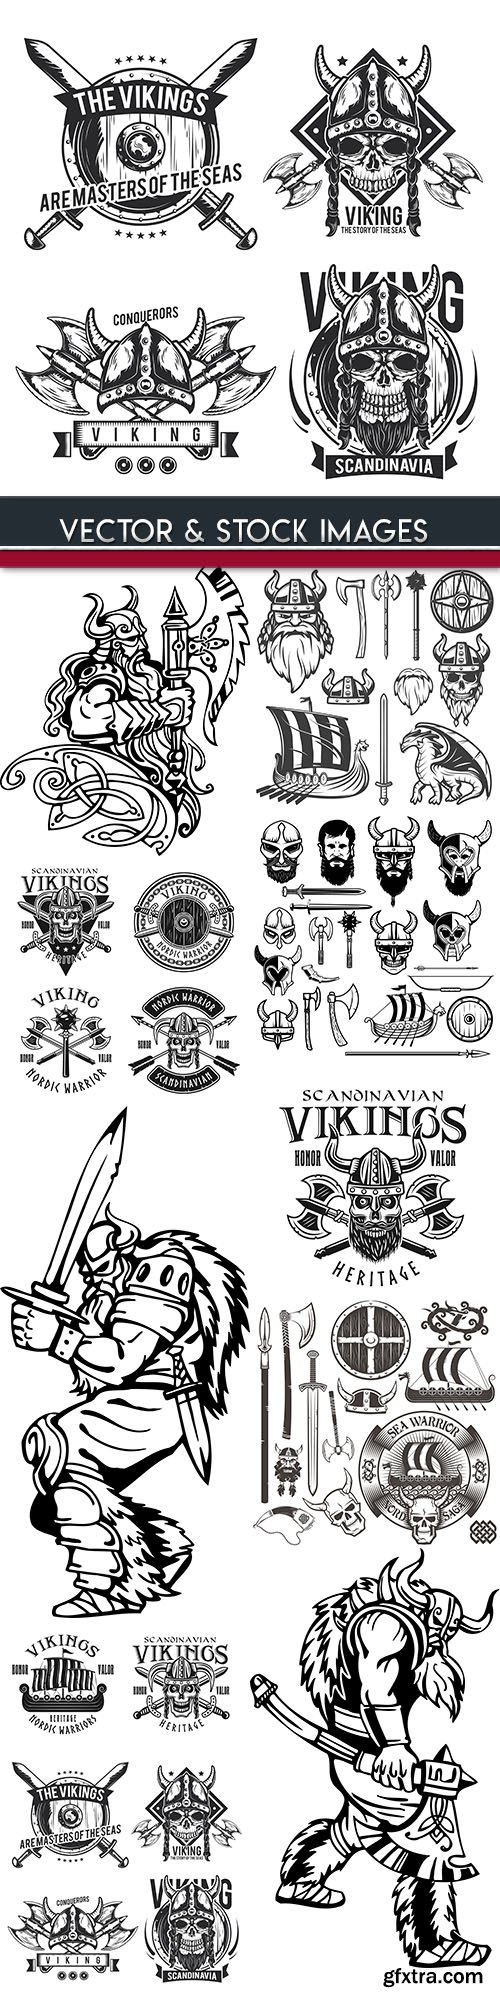 Viking Scandinavian weapon and emblem skull 3